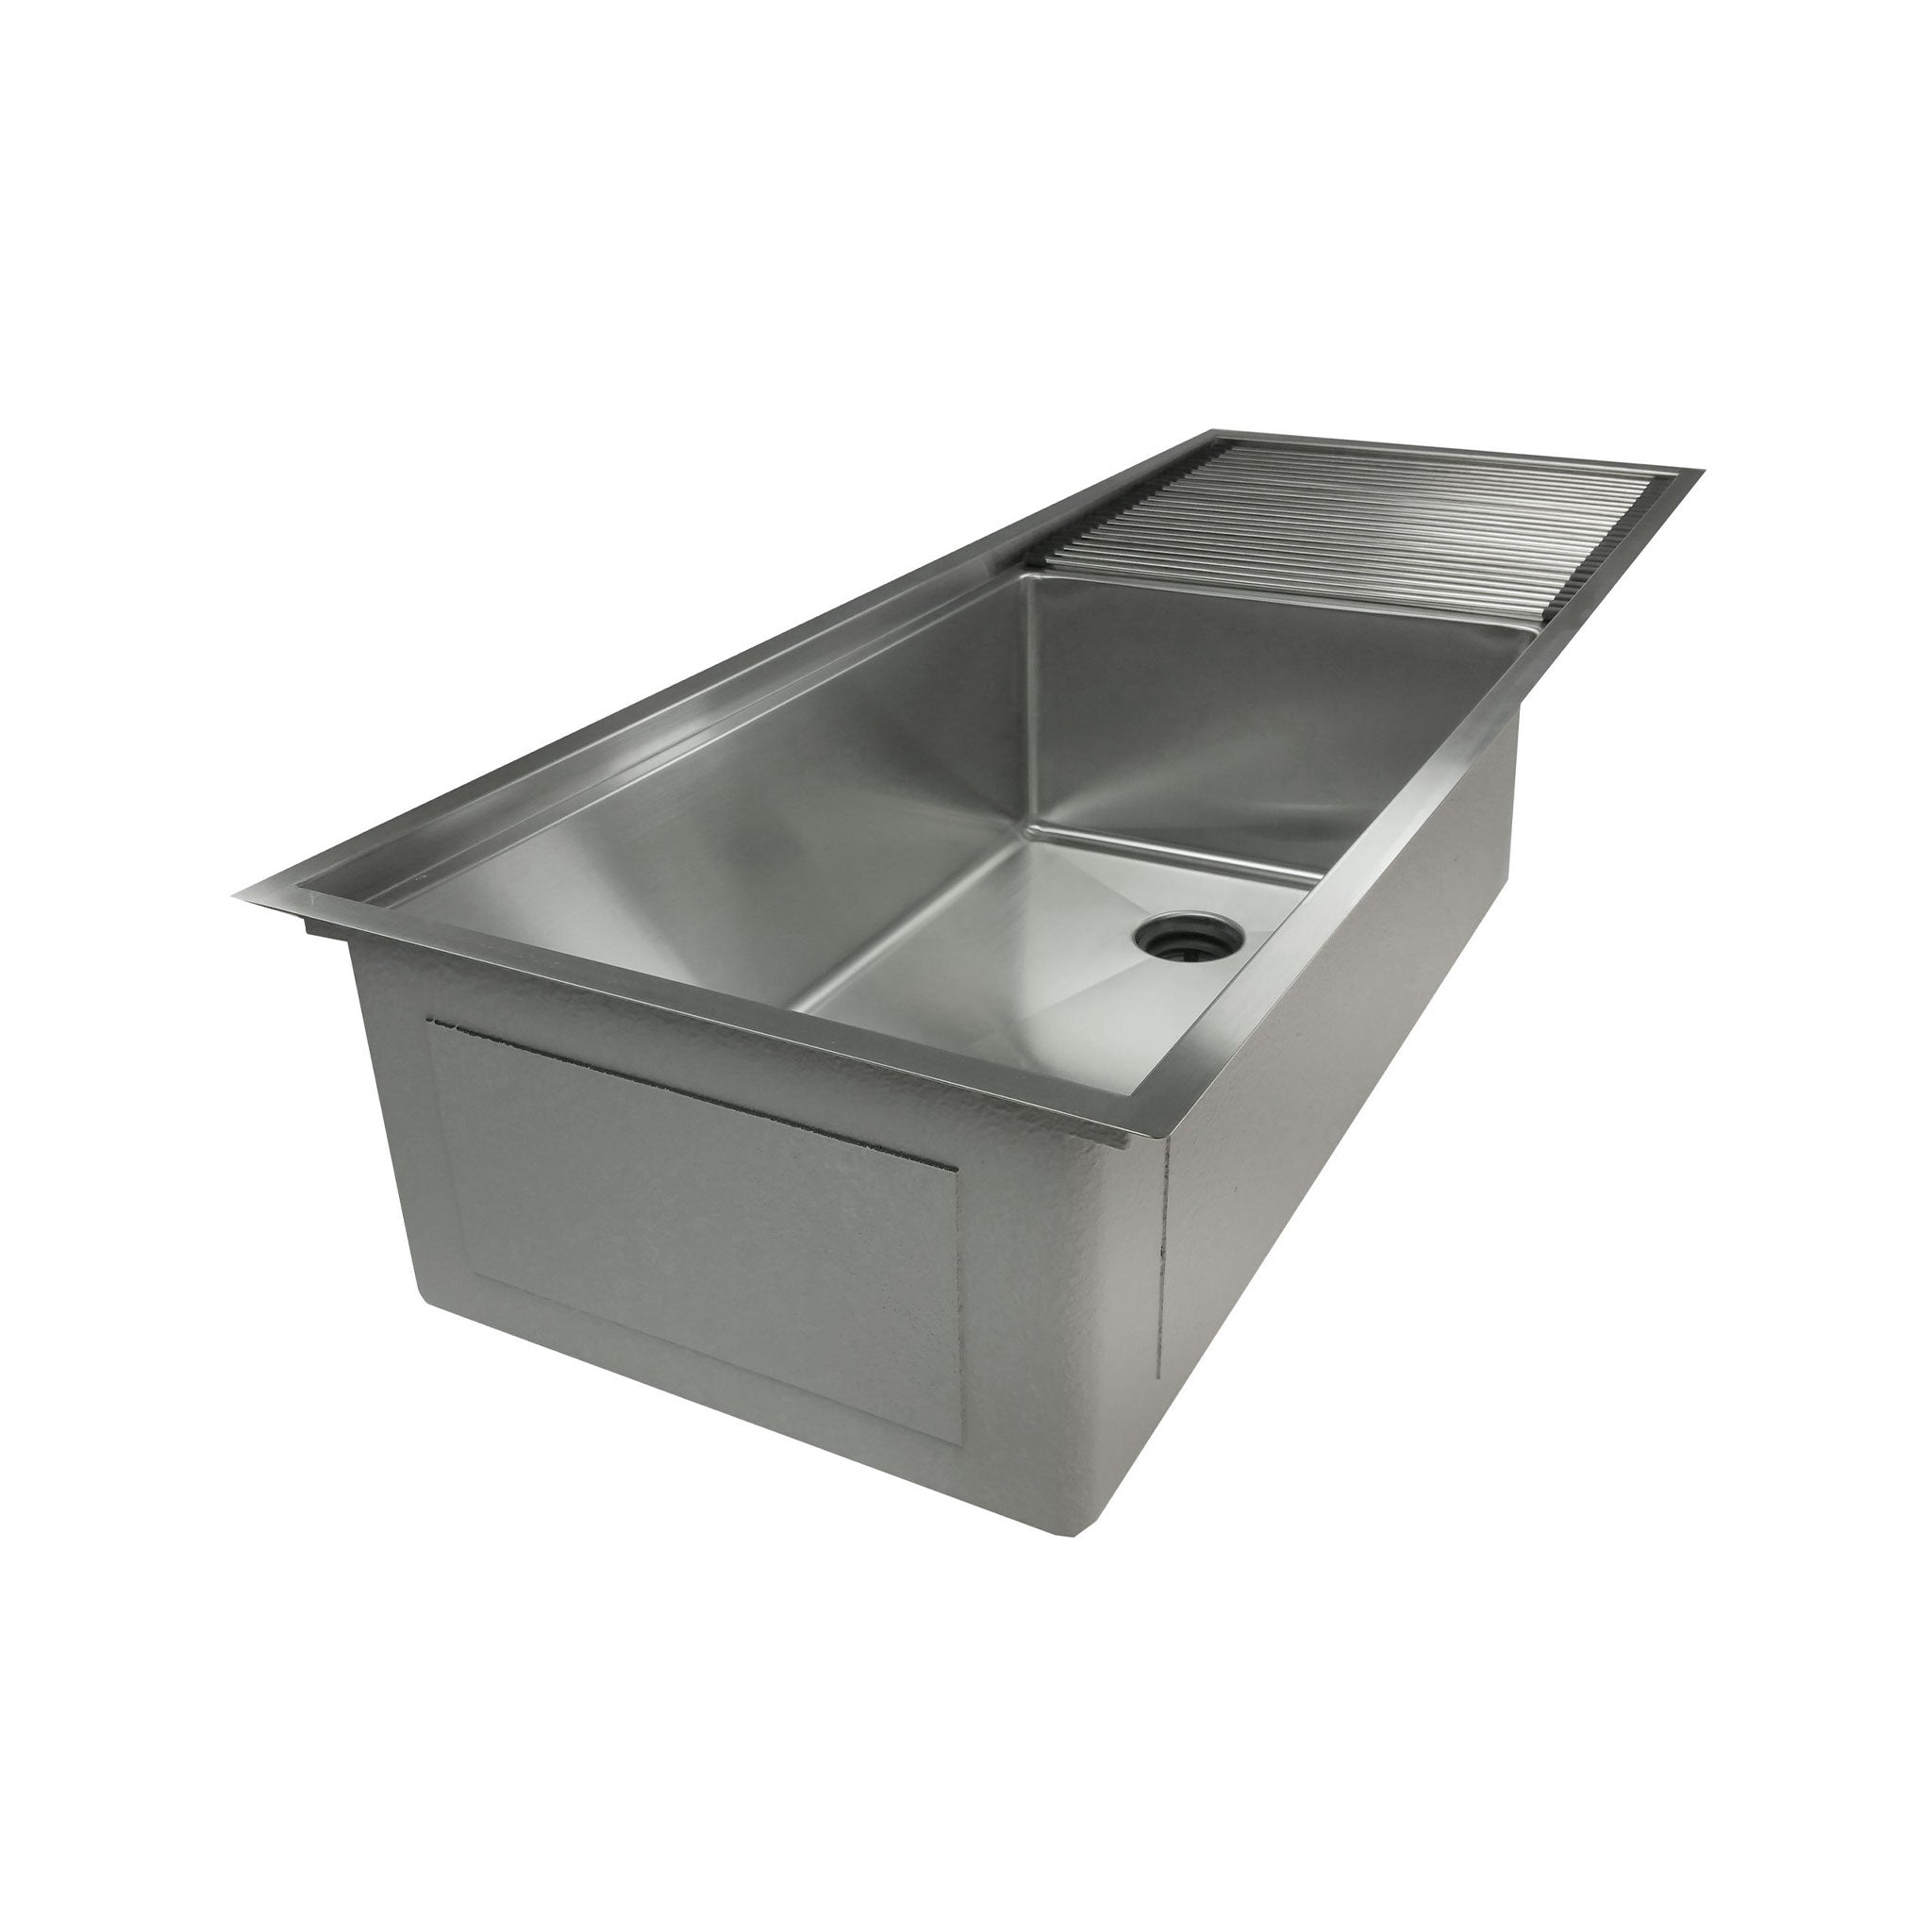 68 Drainboard - Workstation Sink - Double Bowl - Reversible Offset Drain  (5LPD17.30c )